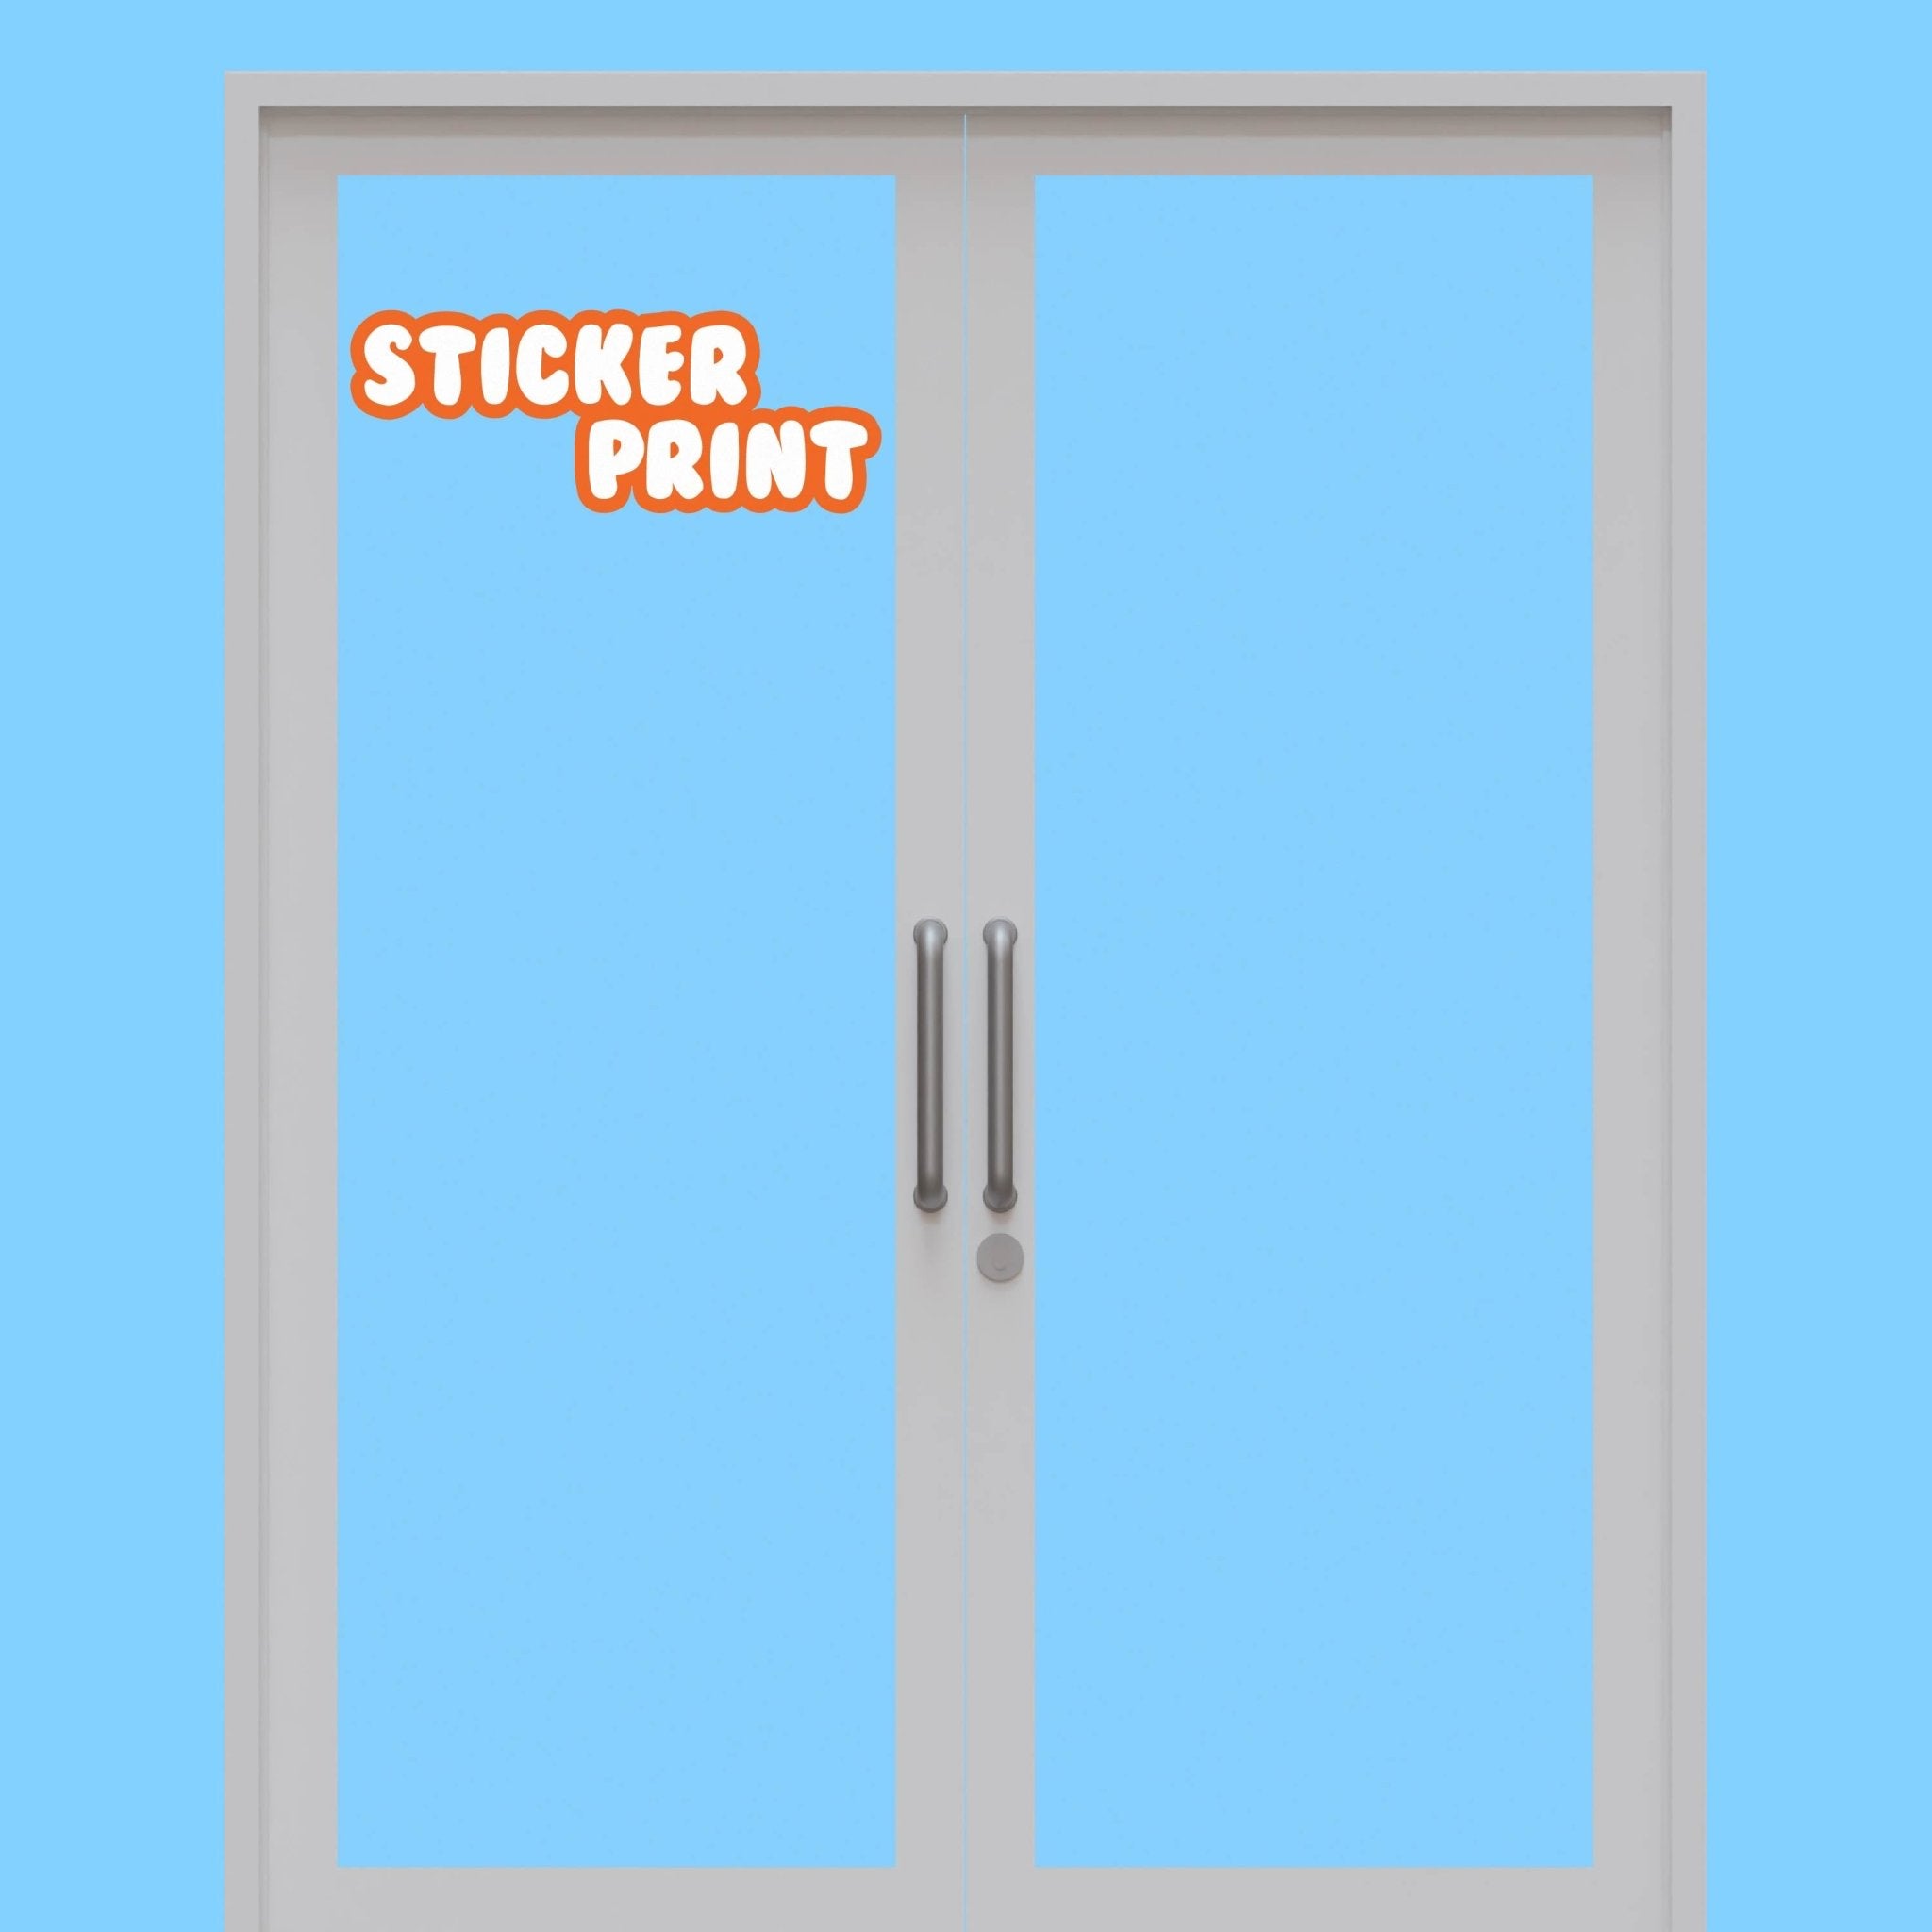 Sticky Side Window Stickers - Stickerprint